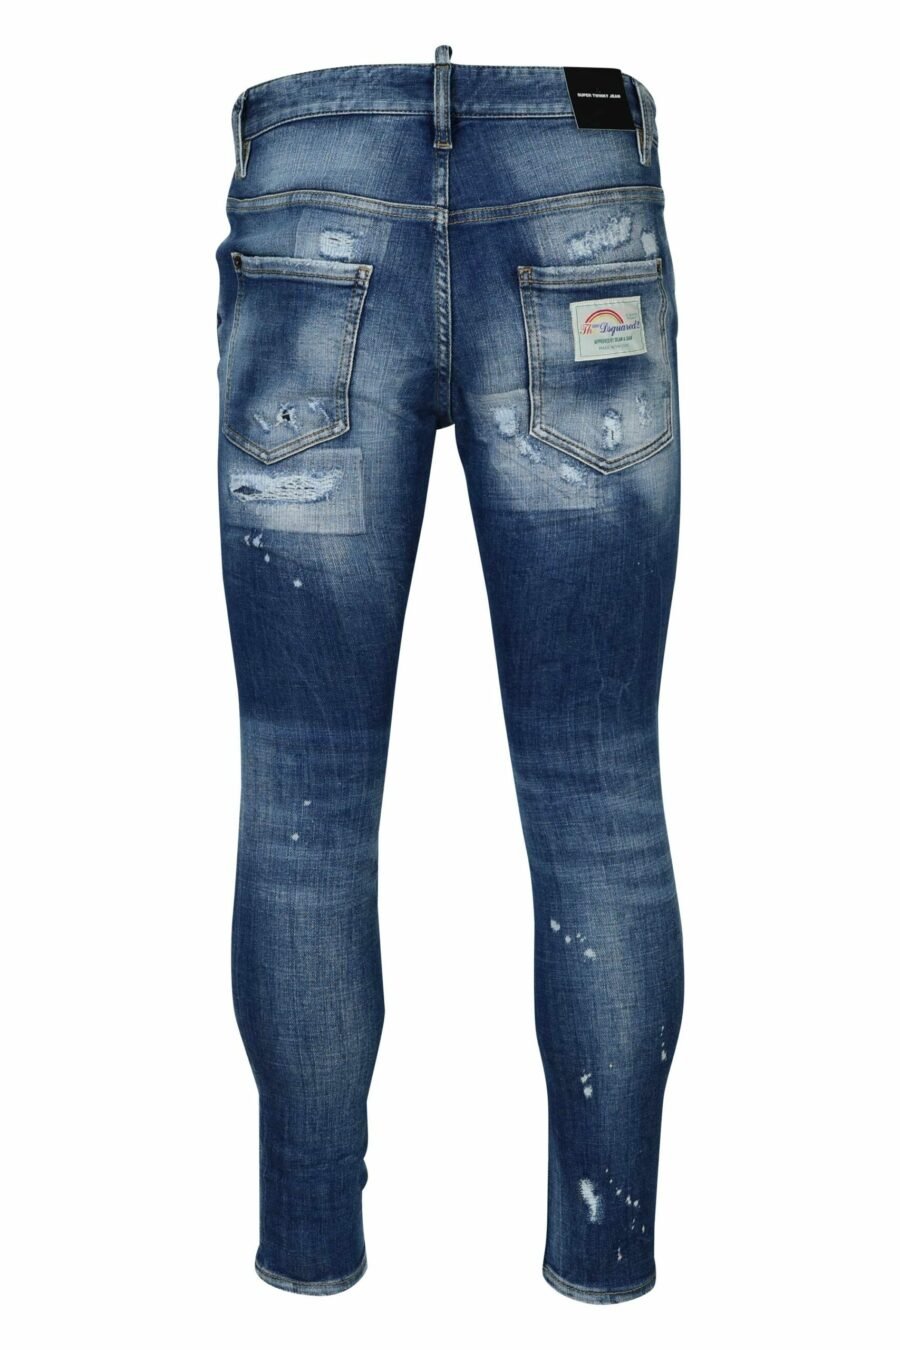 Pantalón vaquero azul "super twinky jean" desgastado con rotos - 8054148339029 2 scaled